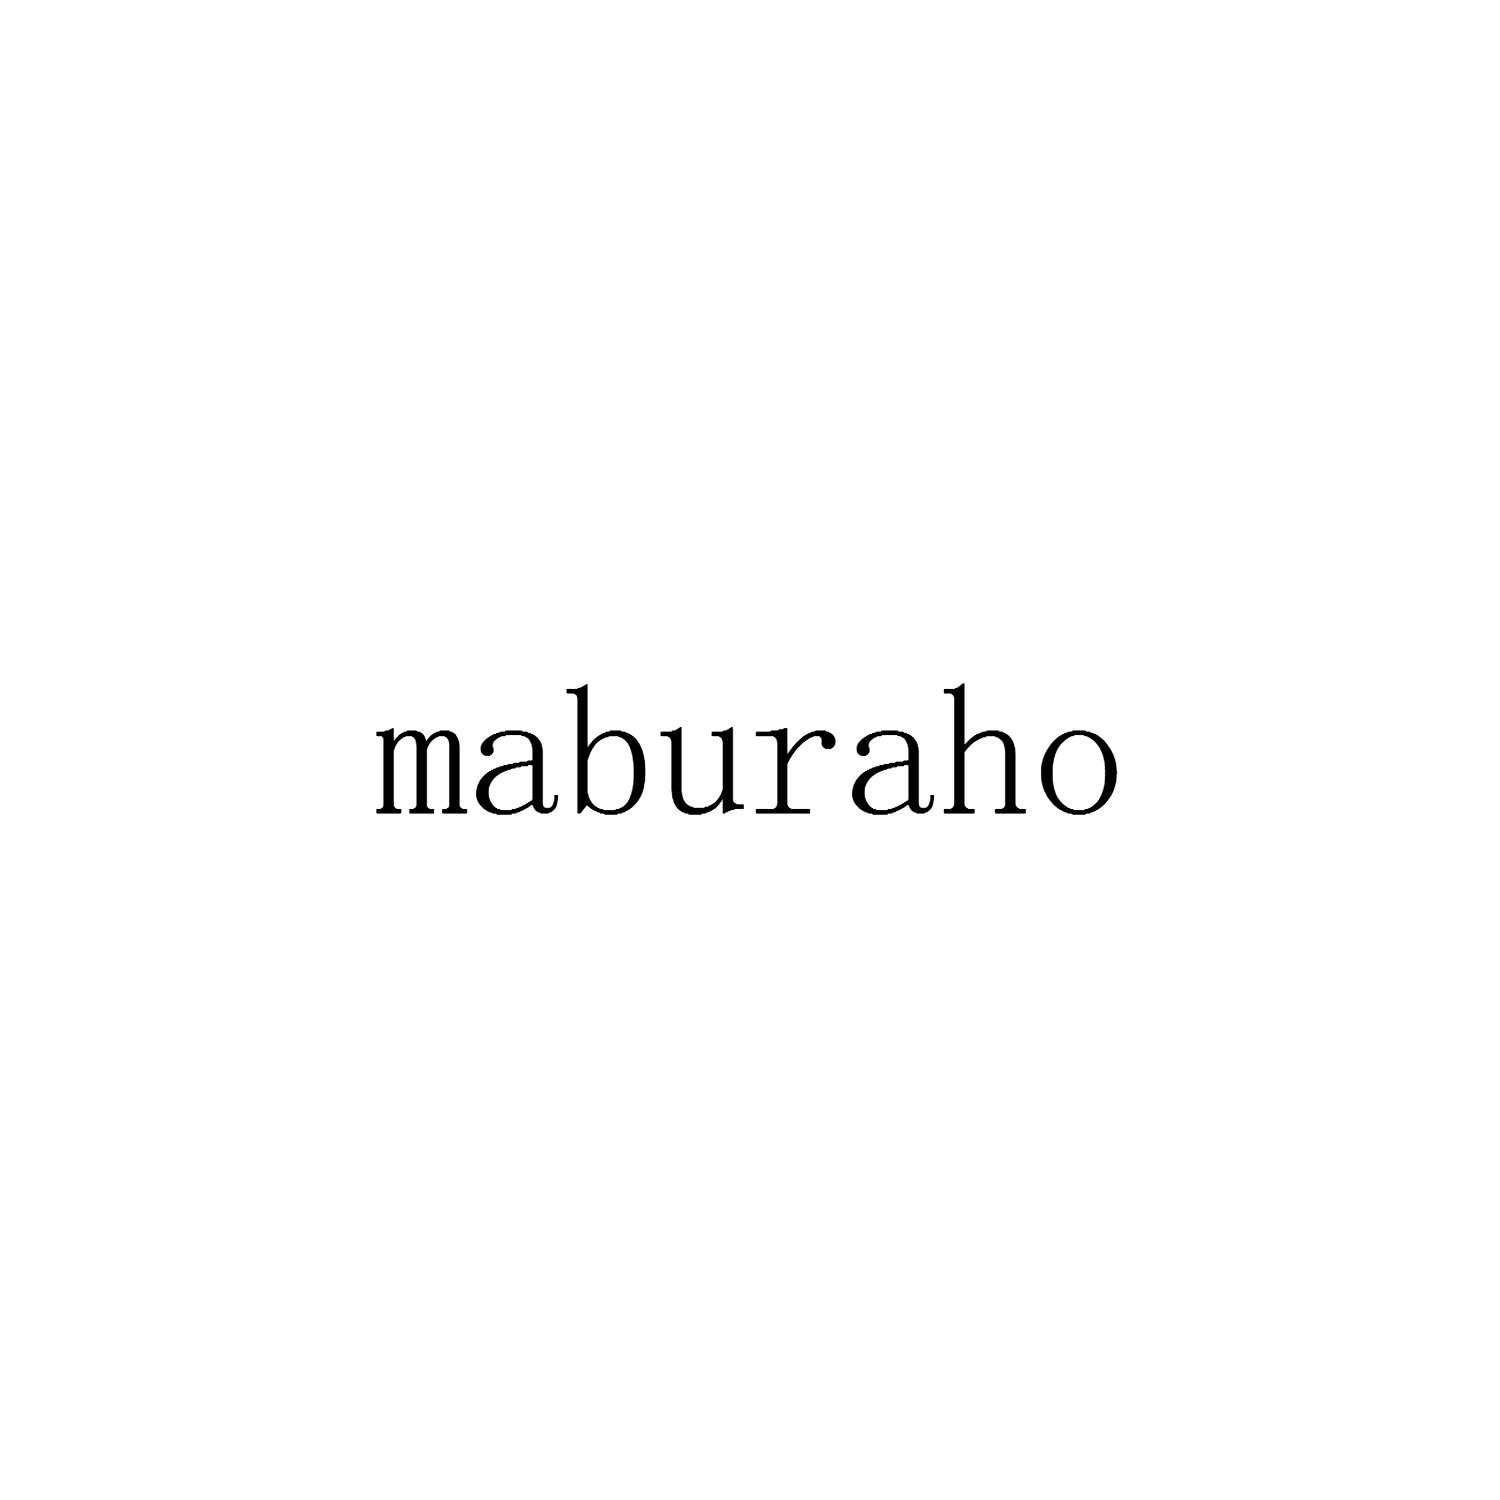 MABURAHO商标转让